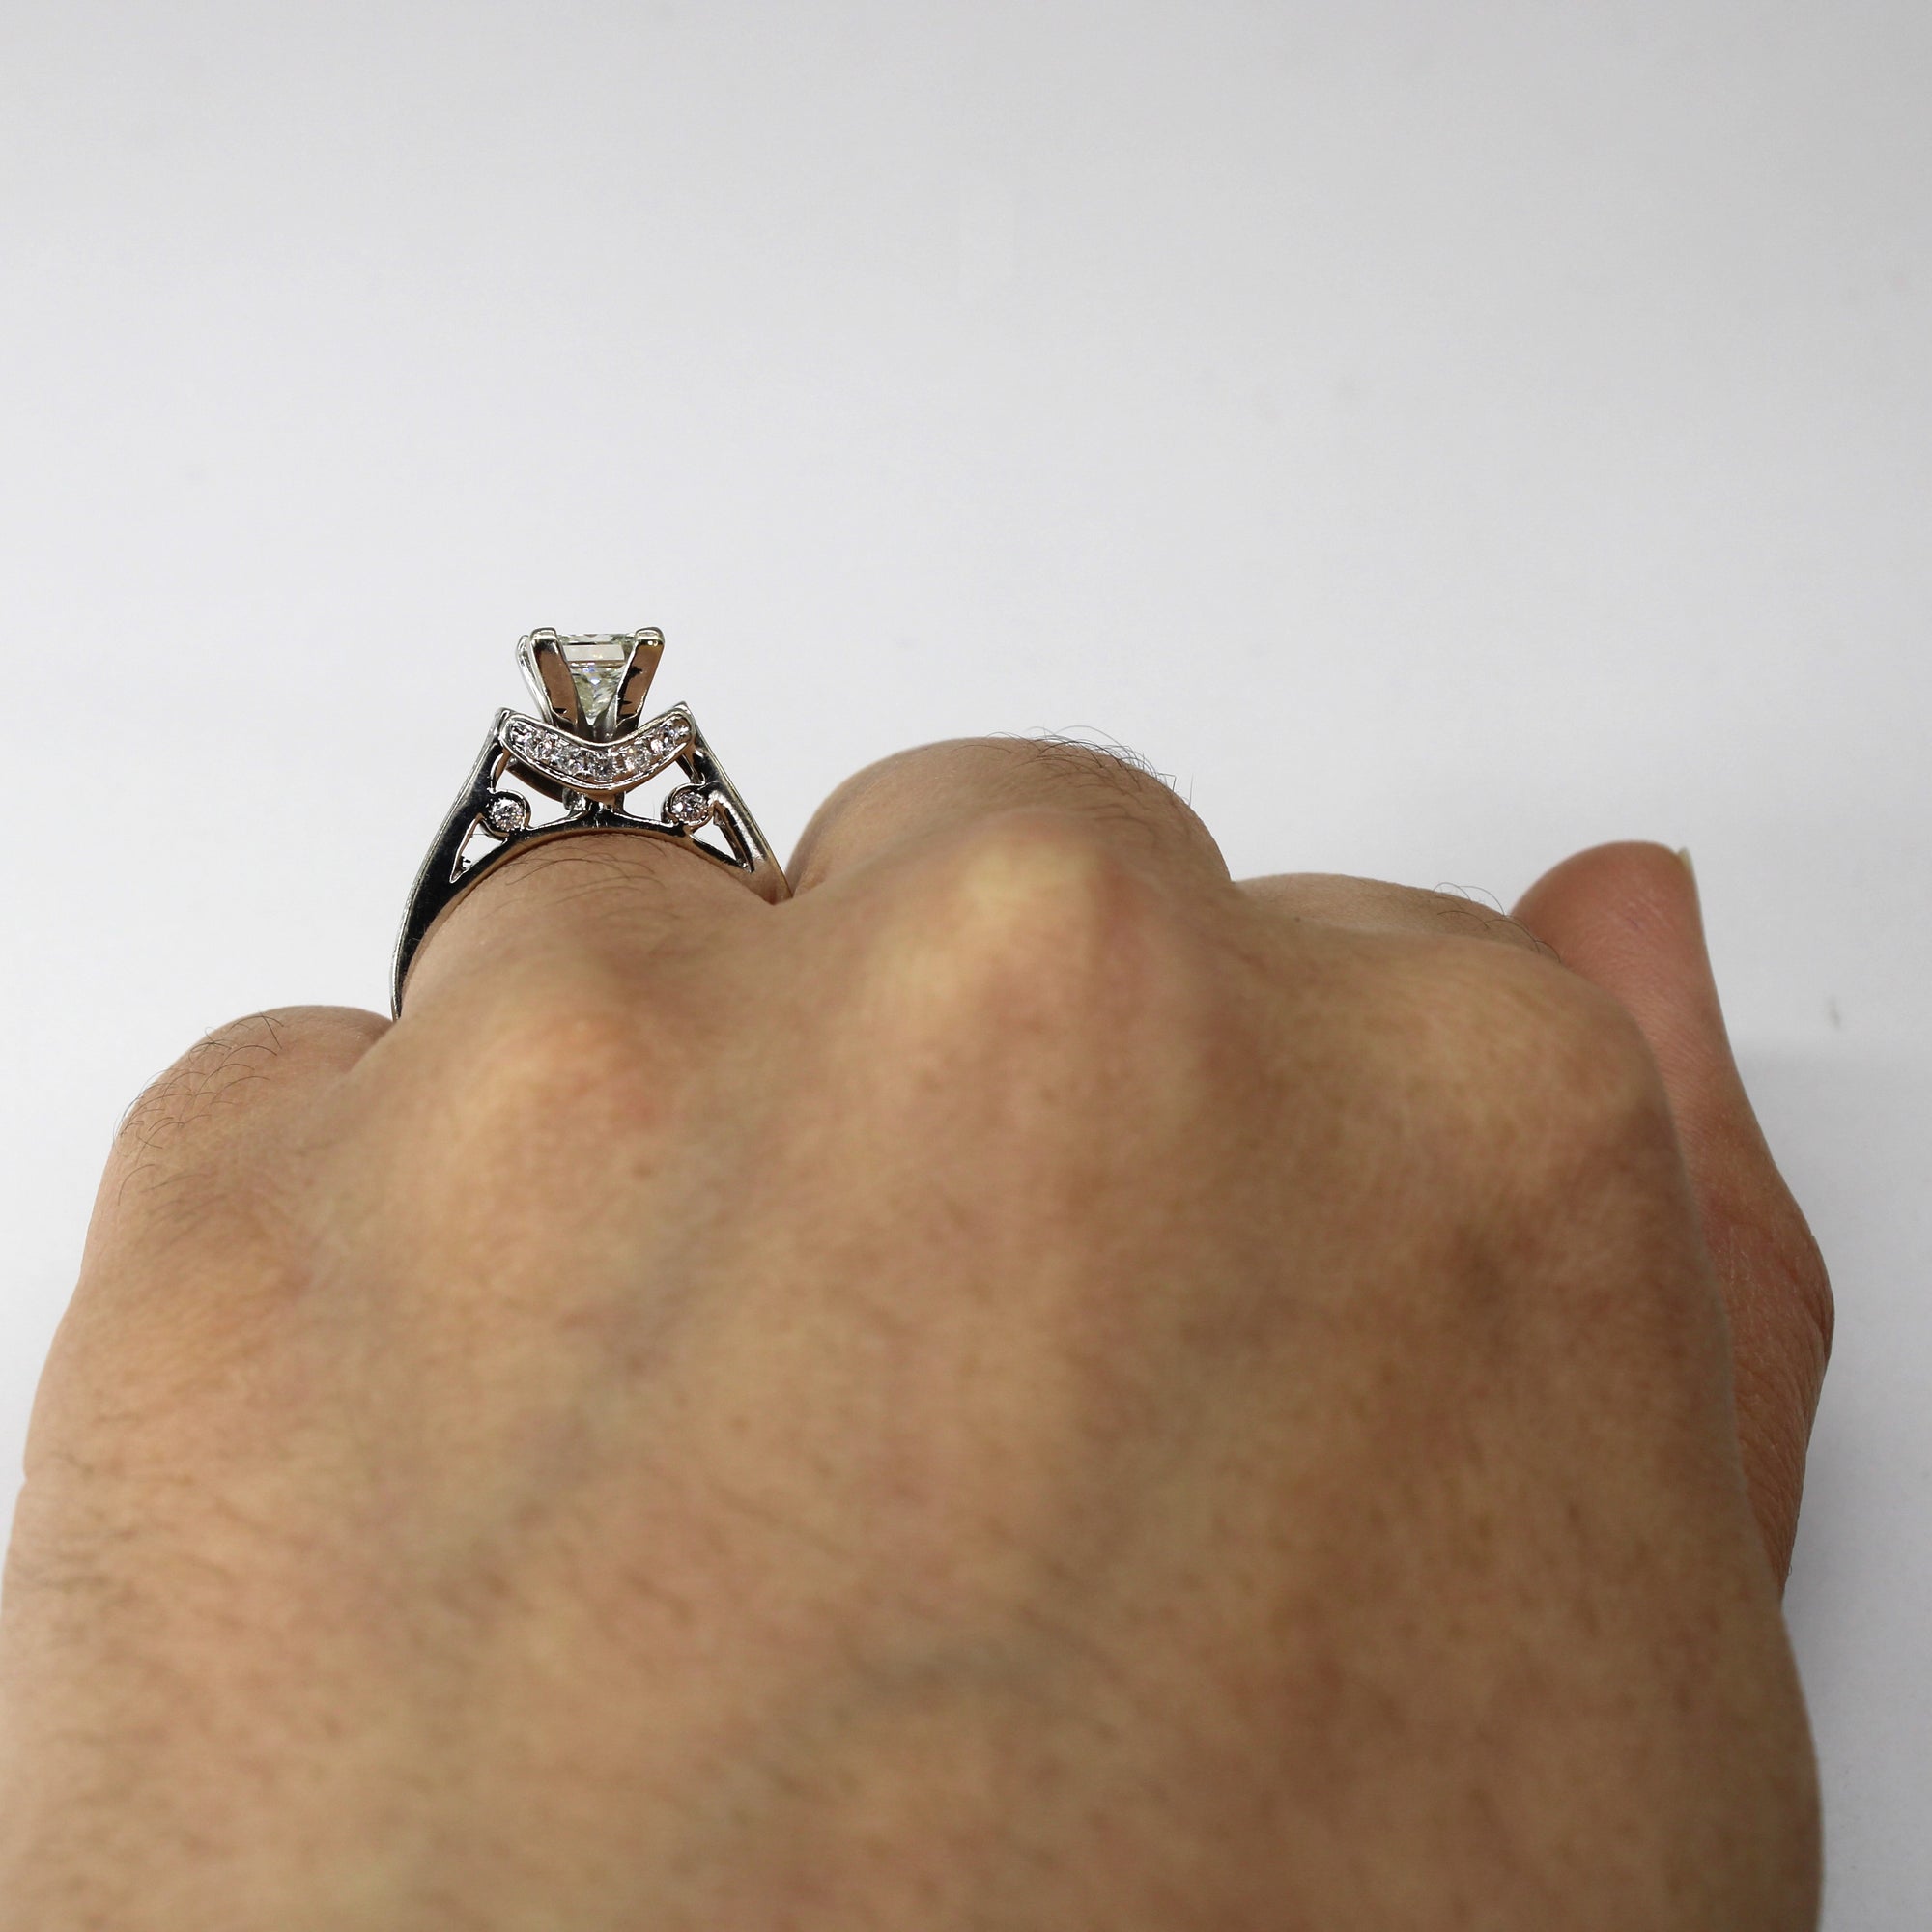 High Set Princess Diamond Engagement Ring | 1.76ctw | SZ 5.5 |